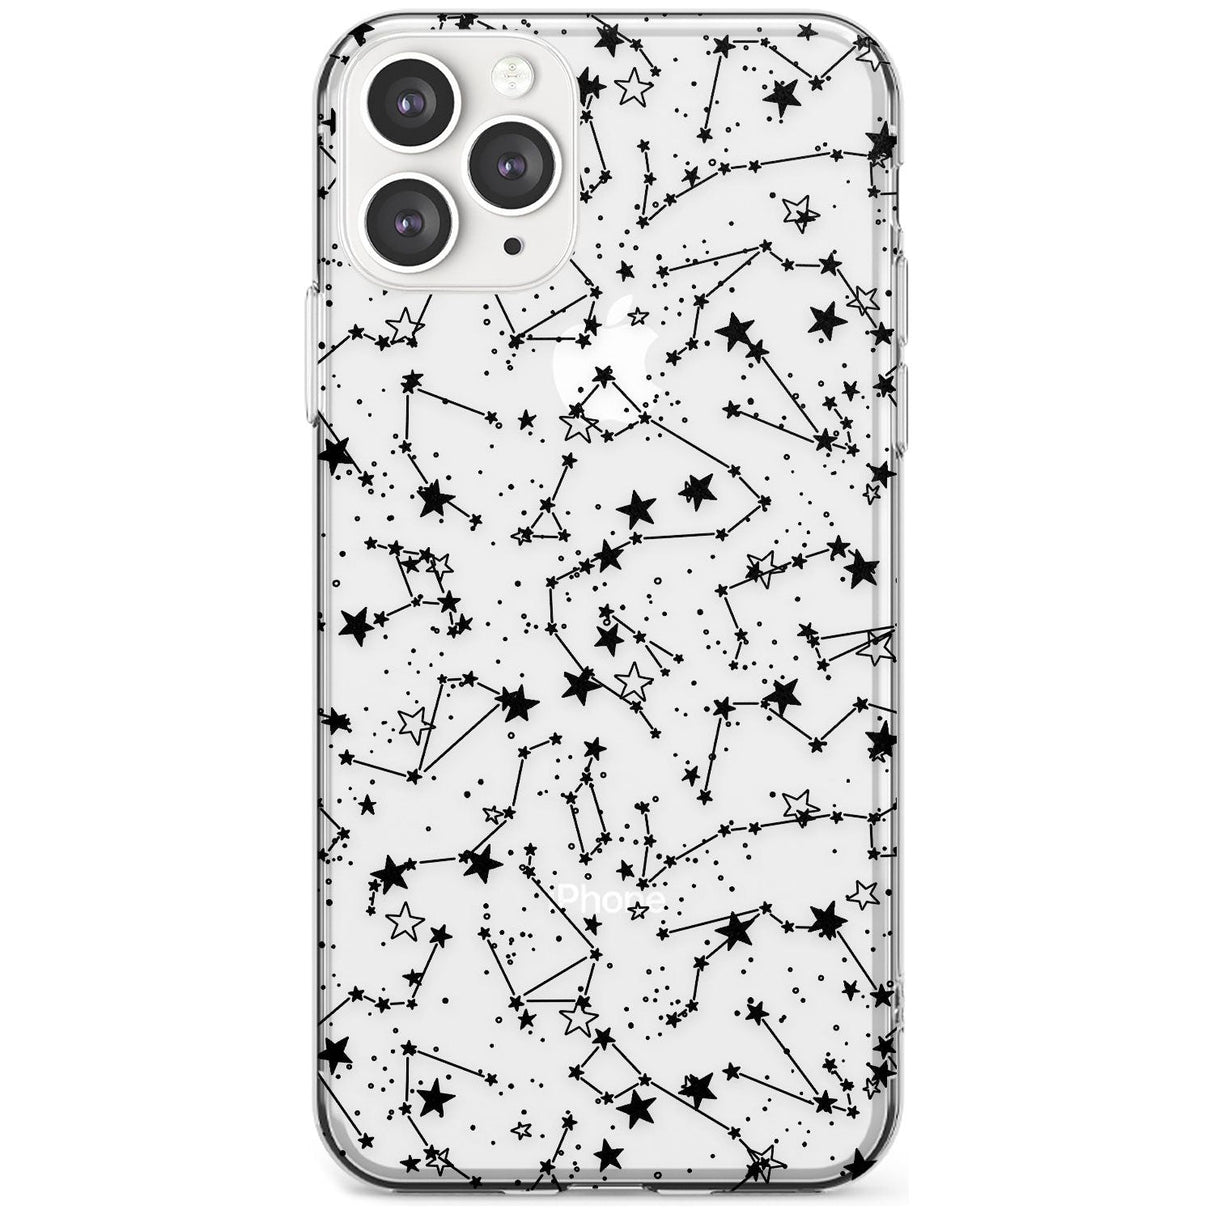 Constellations Slim TPU Phone Case for iPhone 11 Pro Max